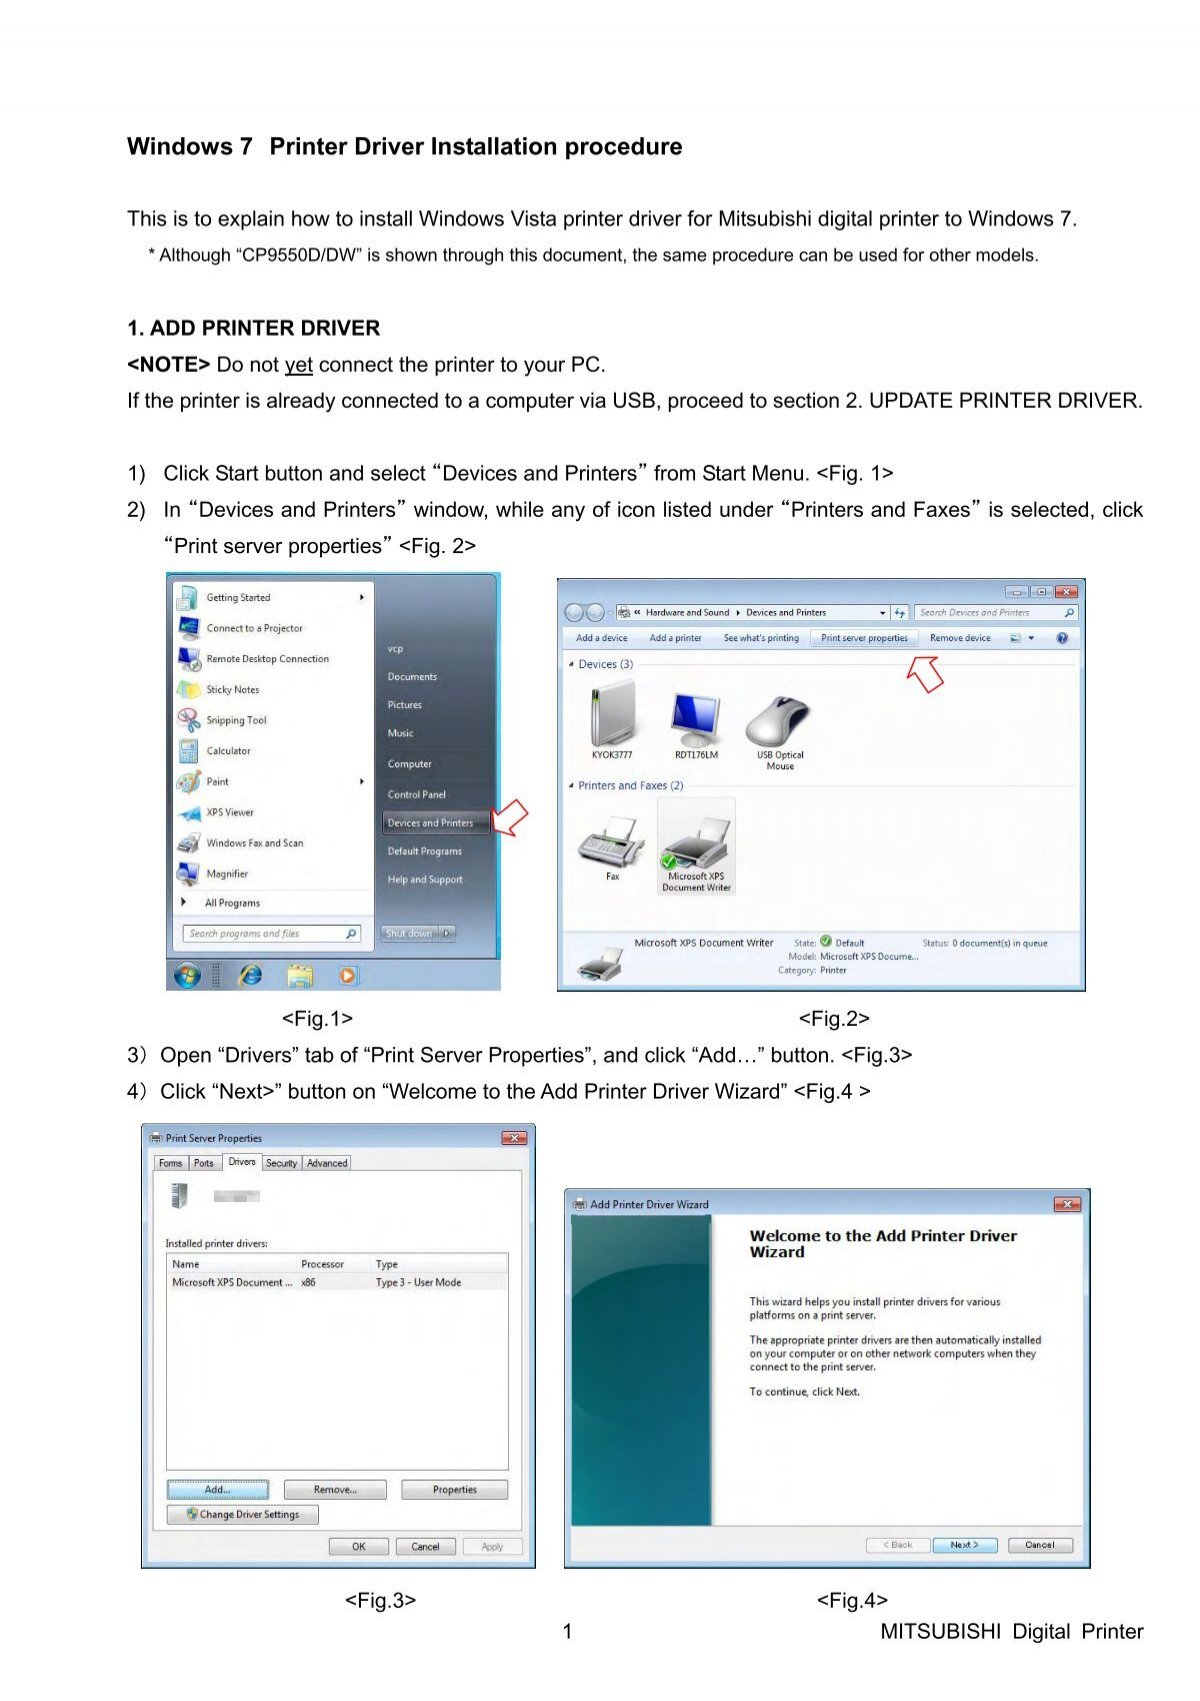 Windows 7 Printer Driver Installation Procedure